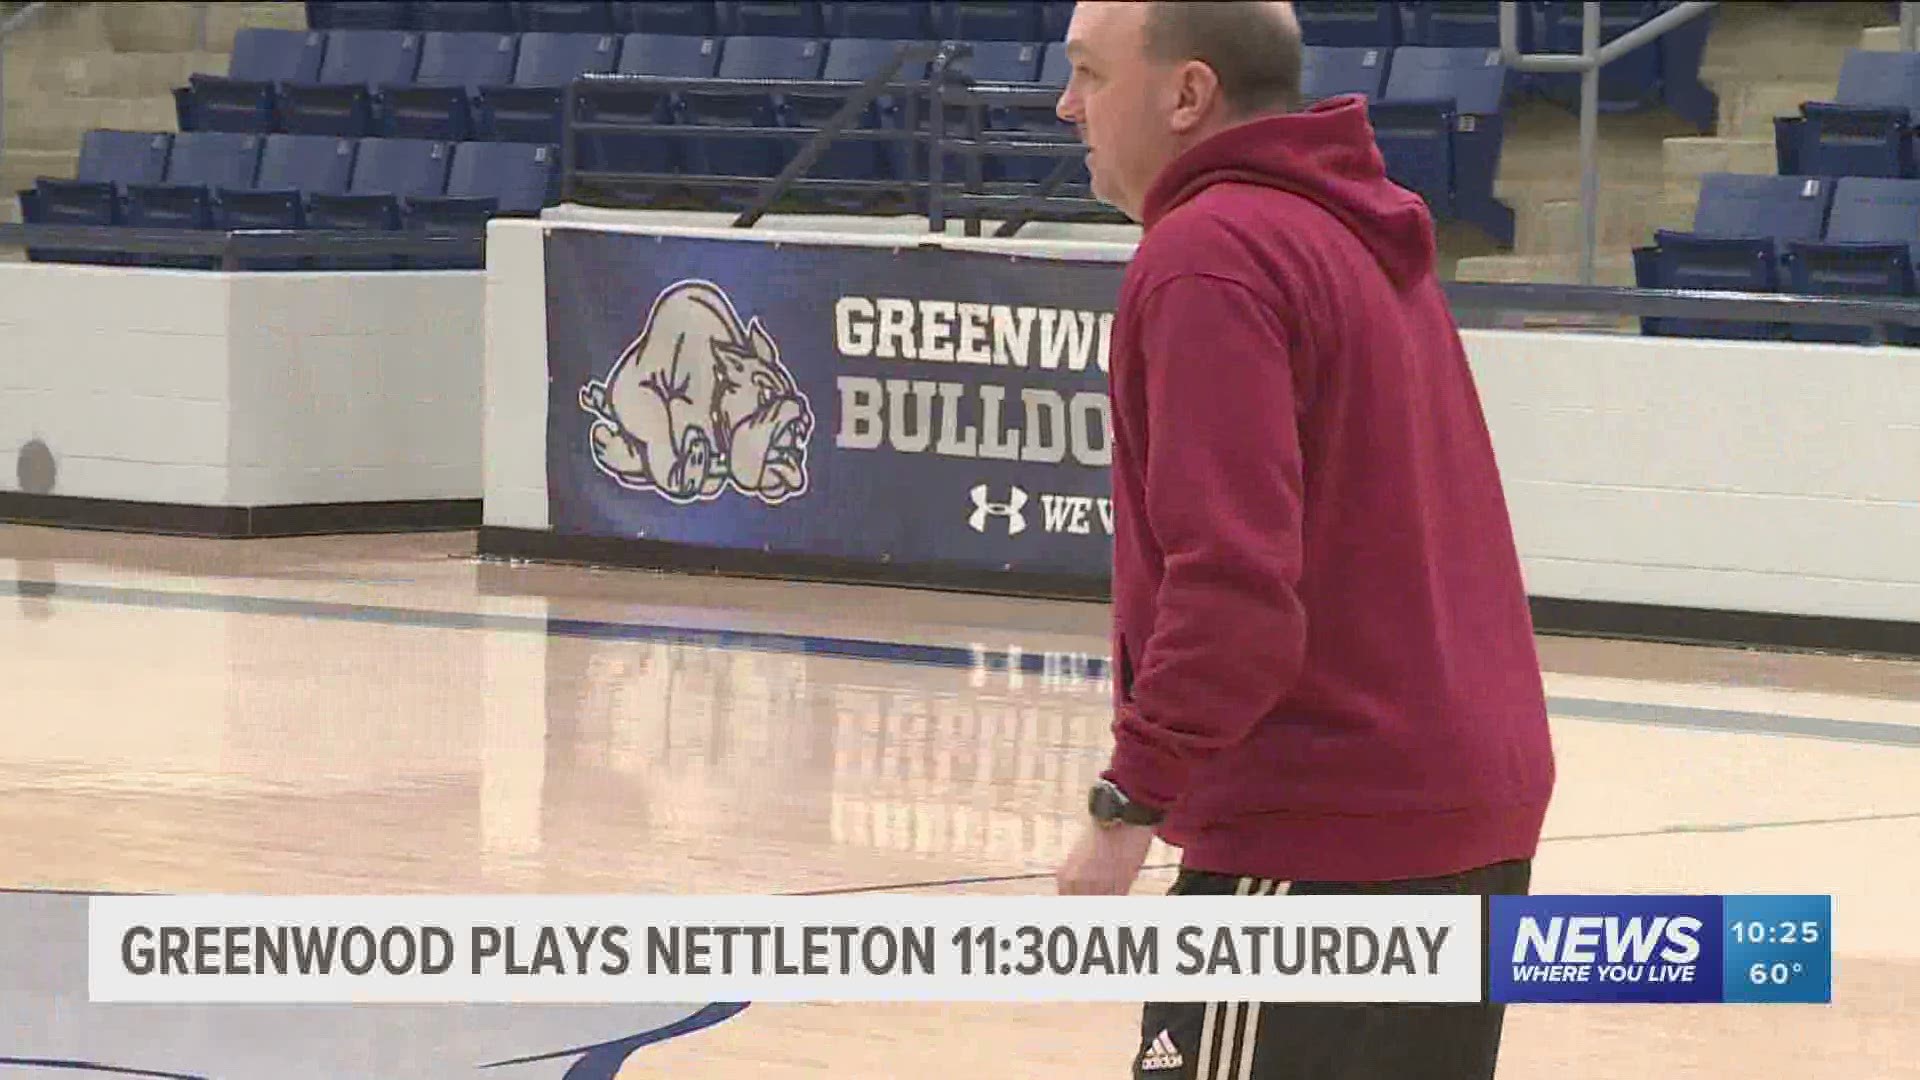 Greenwood plays Nettleton Saturday